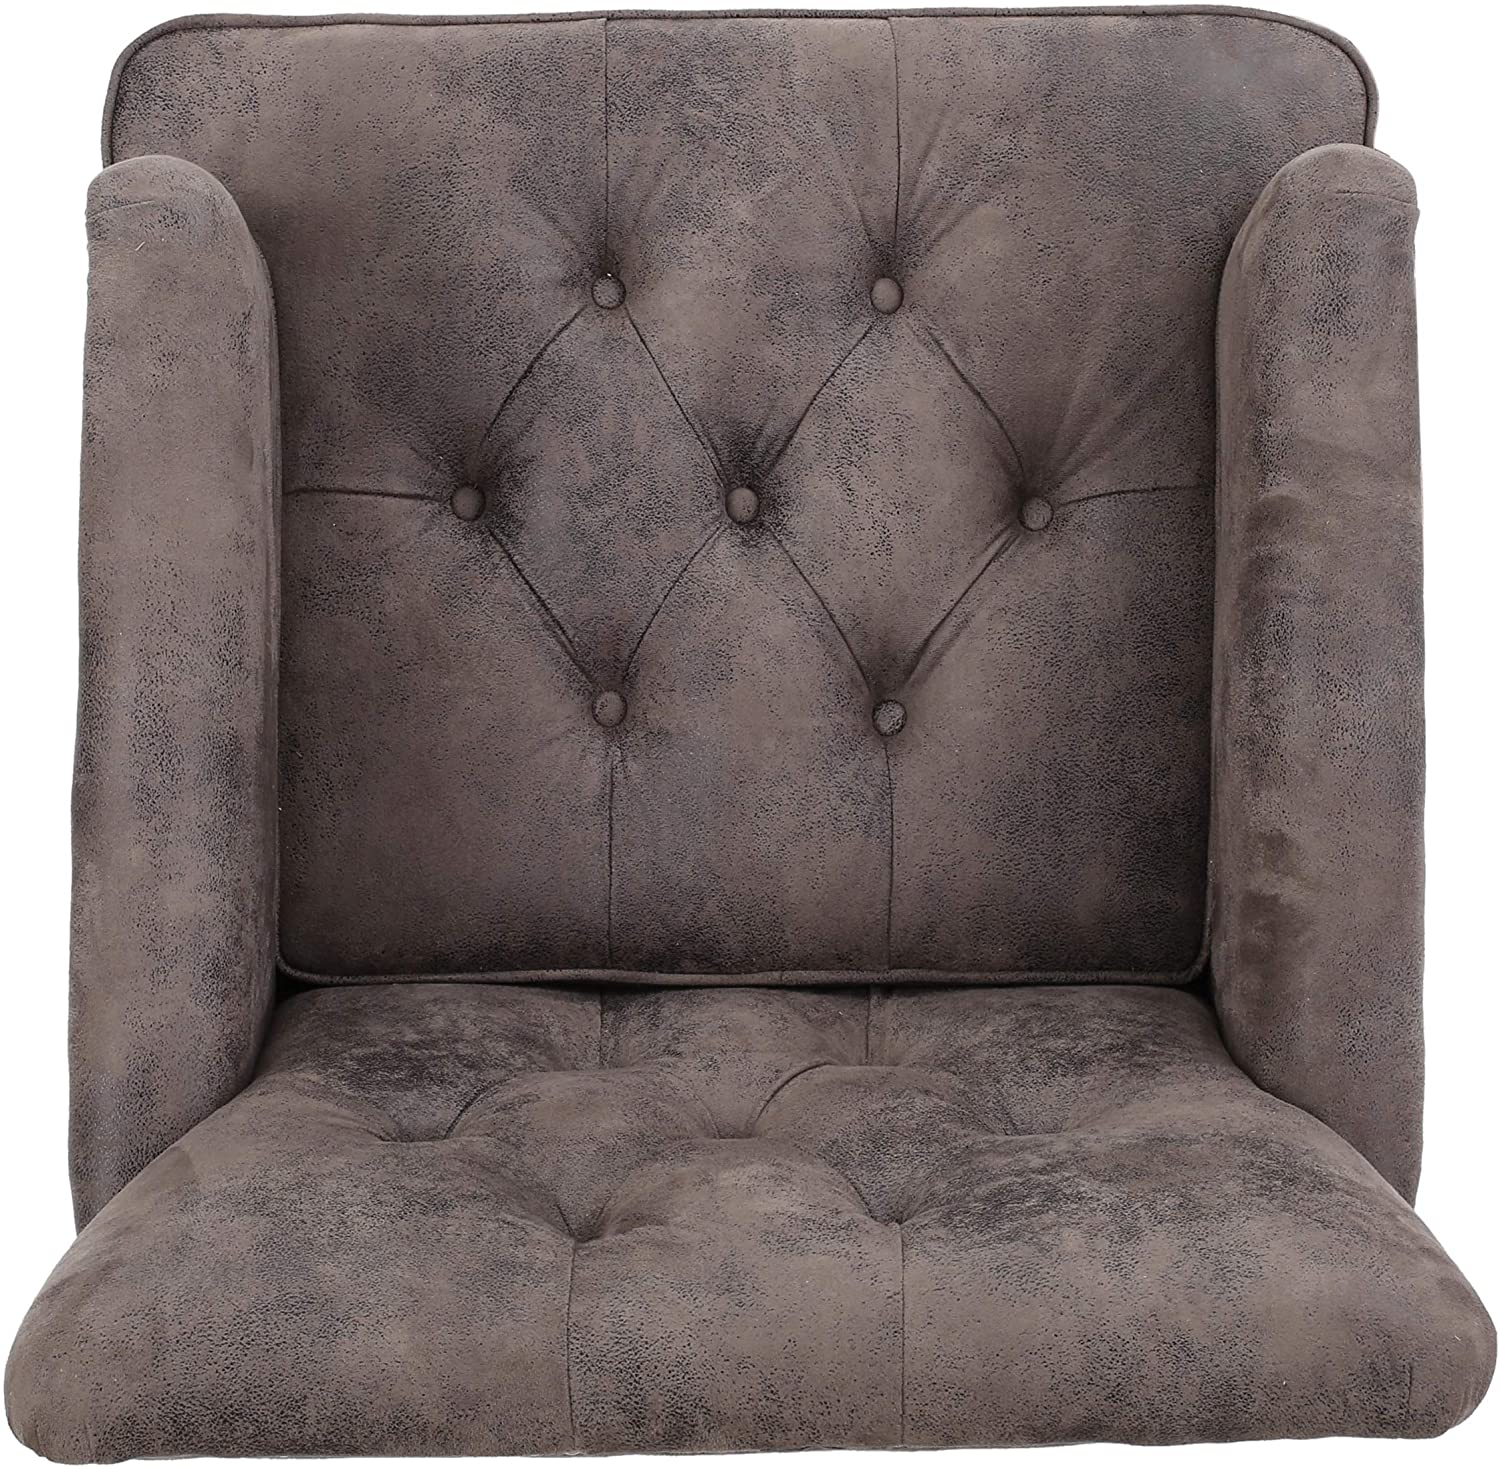 Tufted Club Chair, Fabric Accent Chair